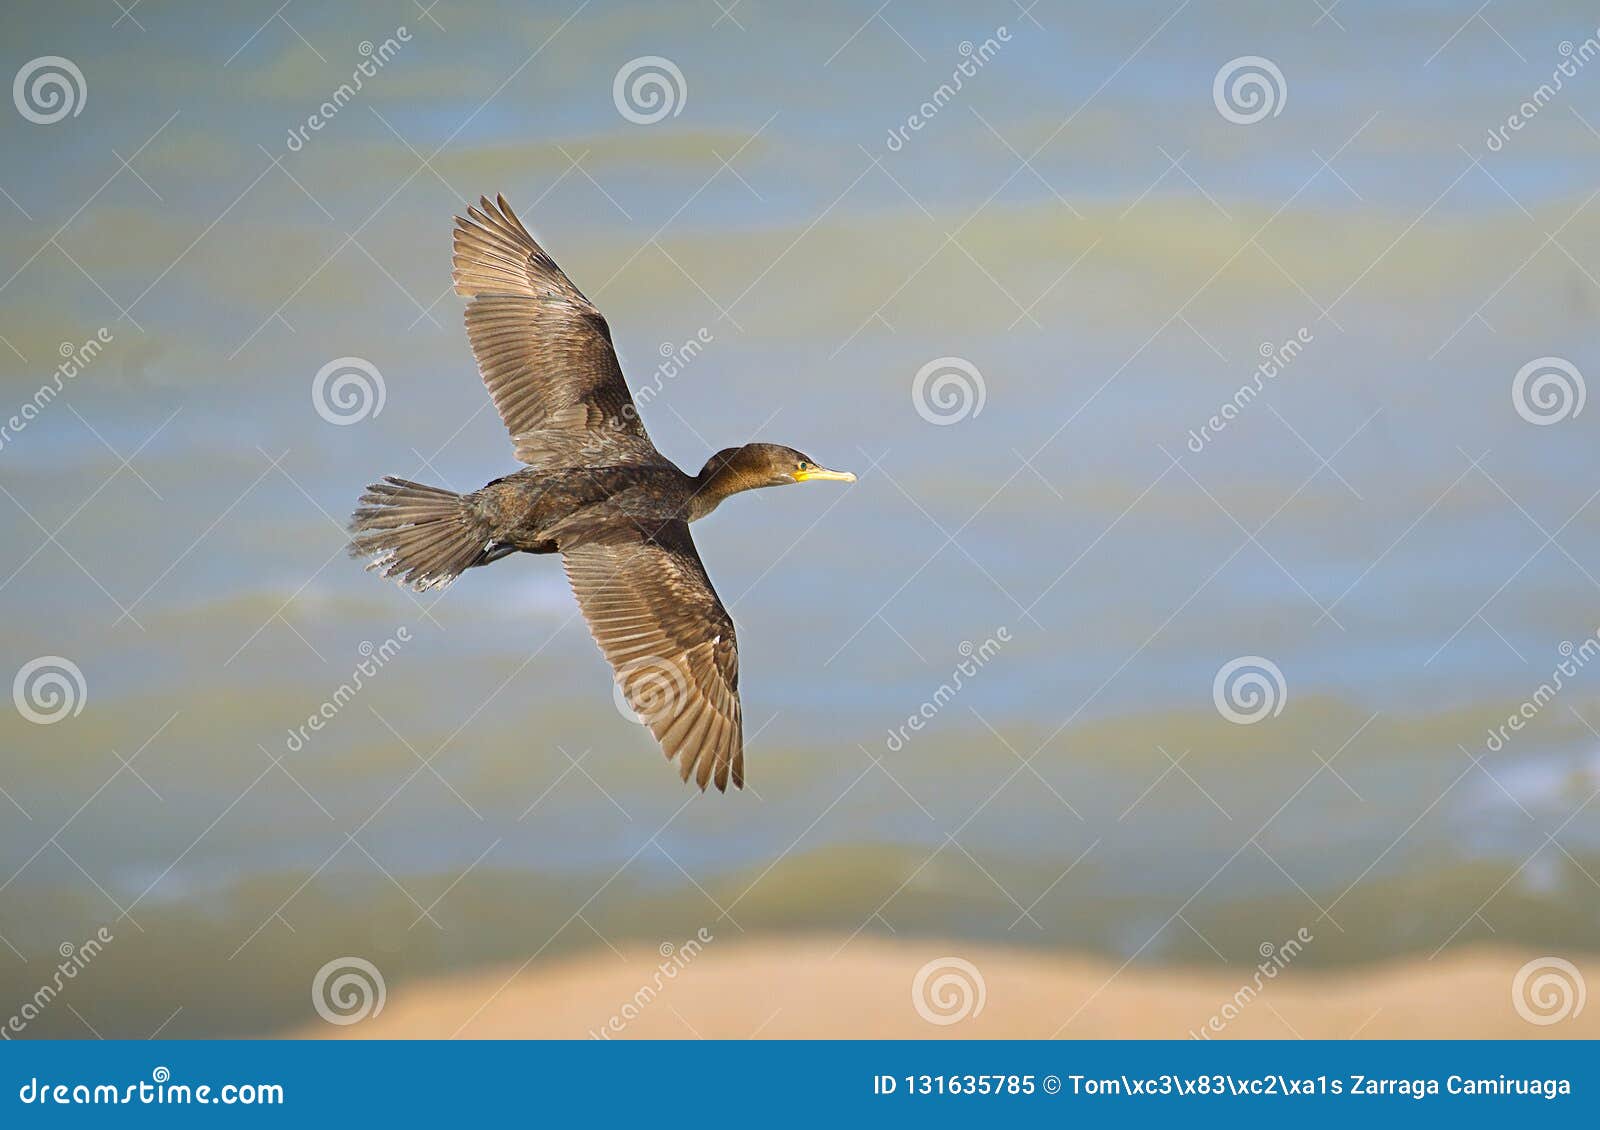 cormorant perched on the coast